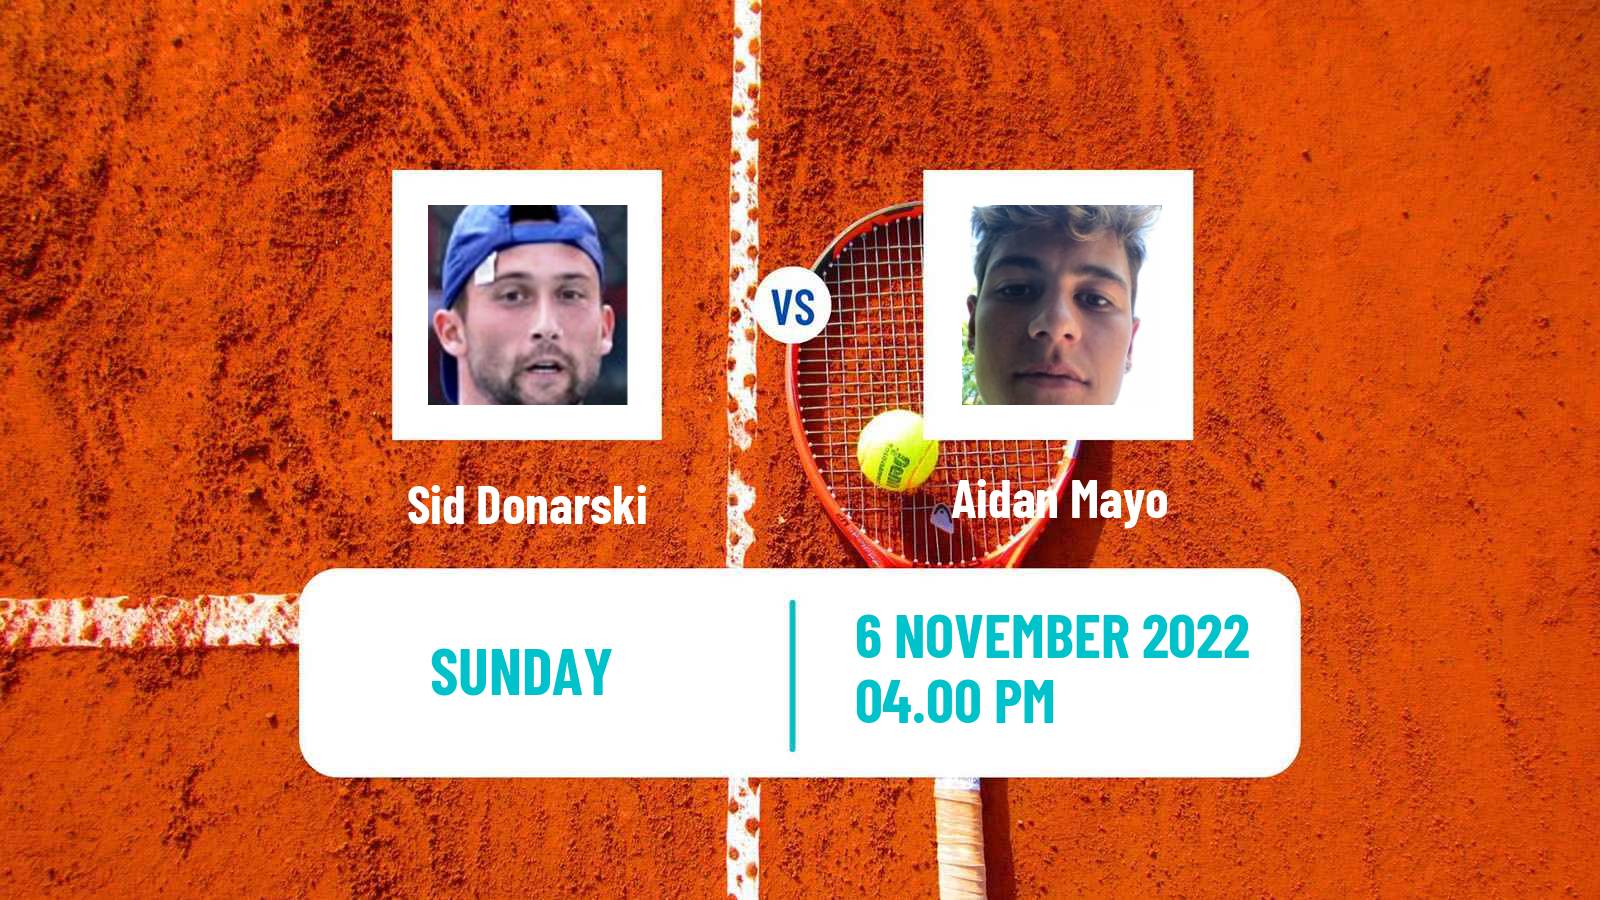 Tennis ATP Challenger Sid Donarski - Aidan Mayo